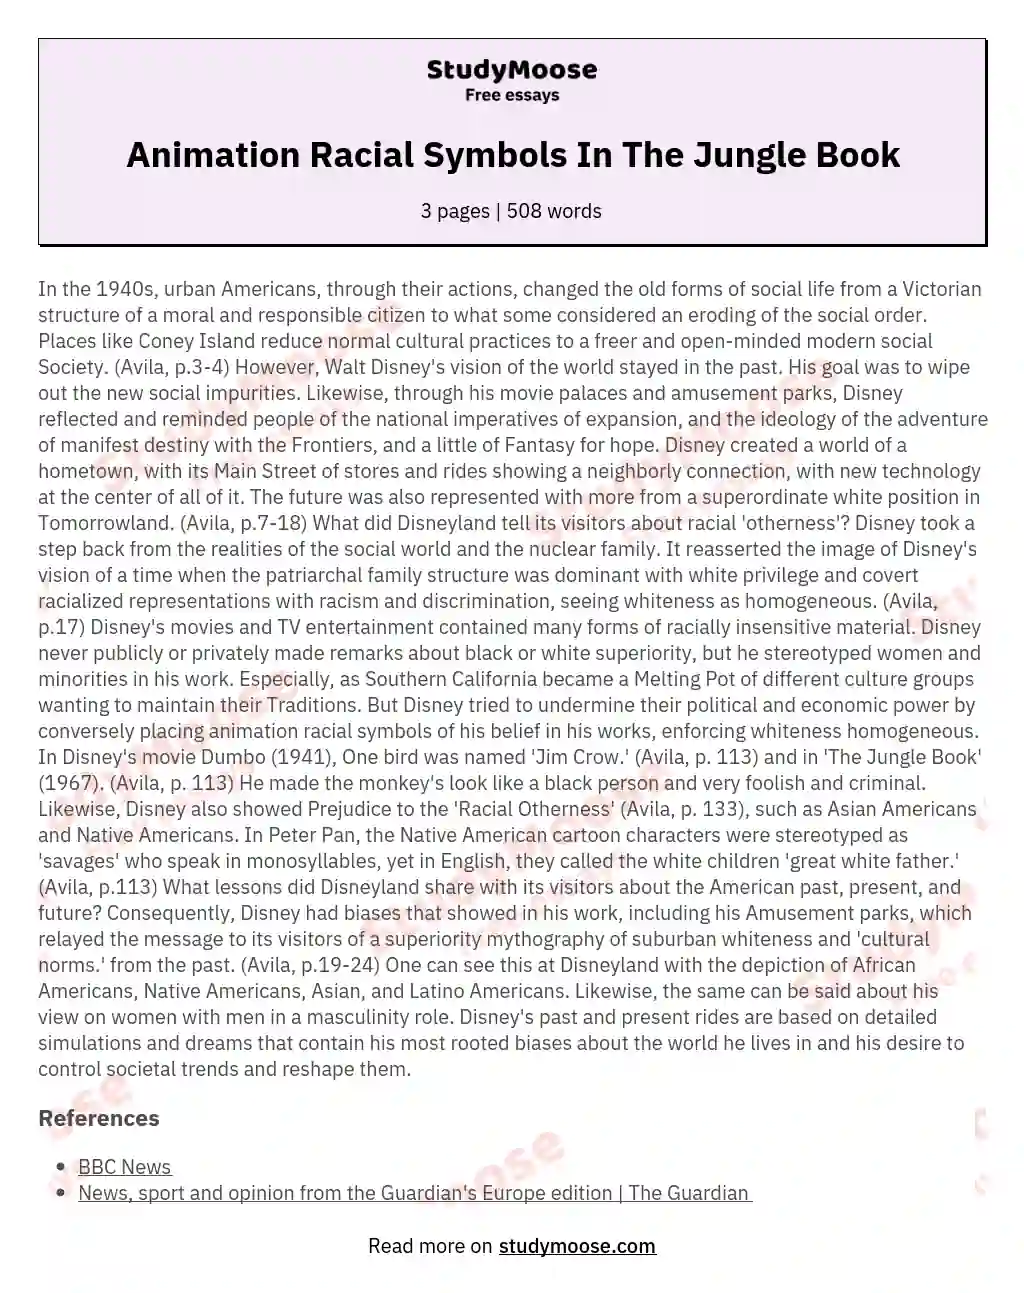 Animation Racial Symbols In The Jungle Book essay